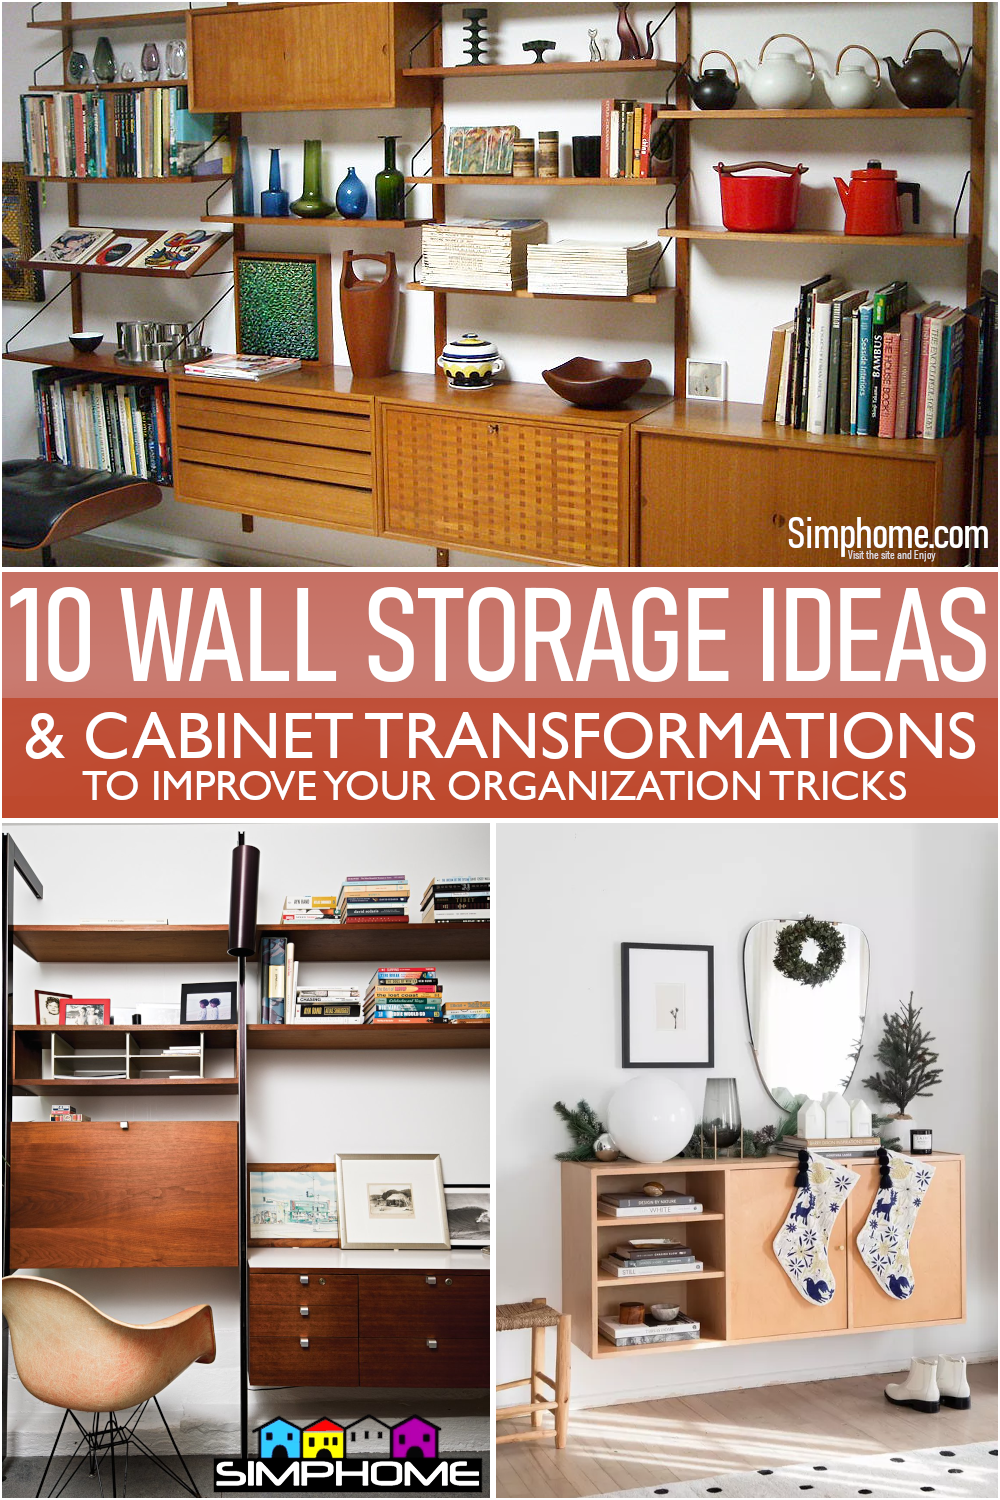 The sweet 10 Wall Storage and Cabinet via Simphome.com